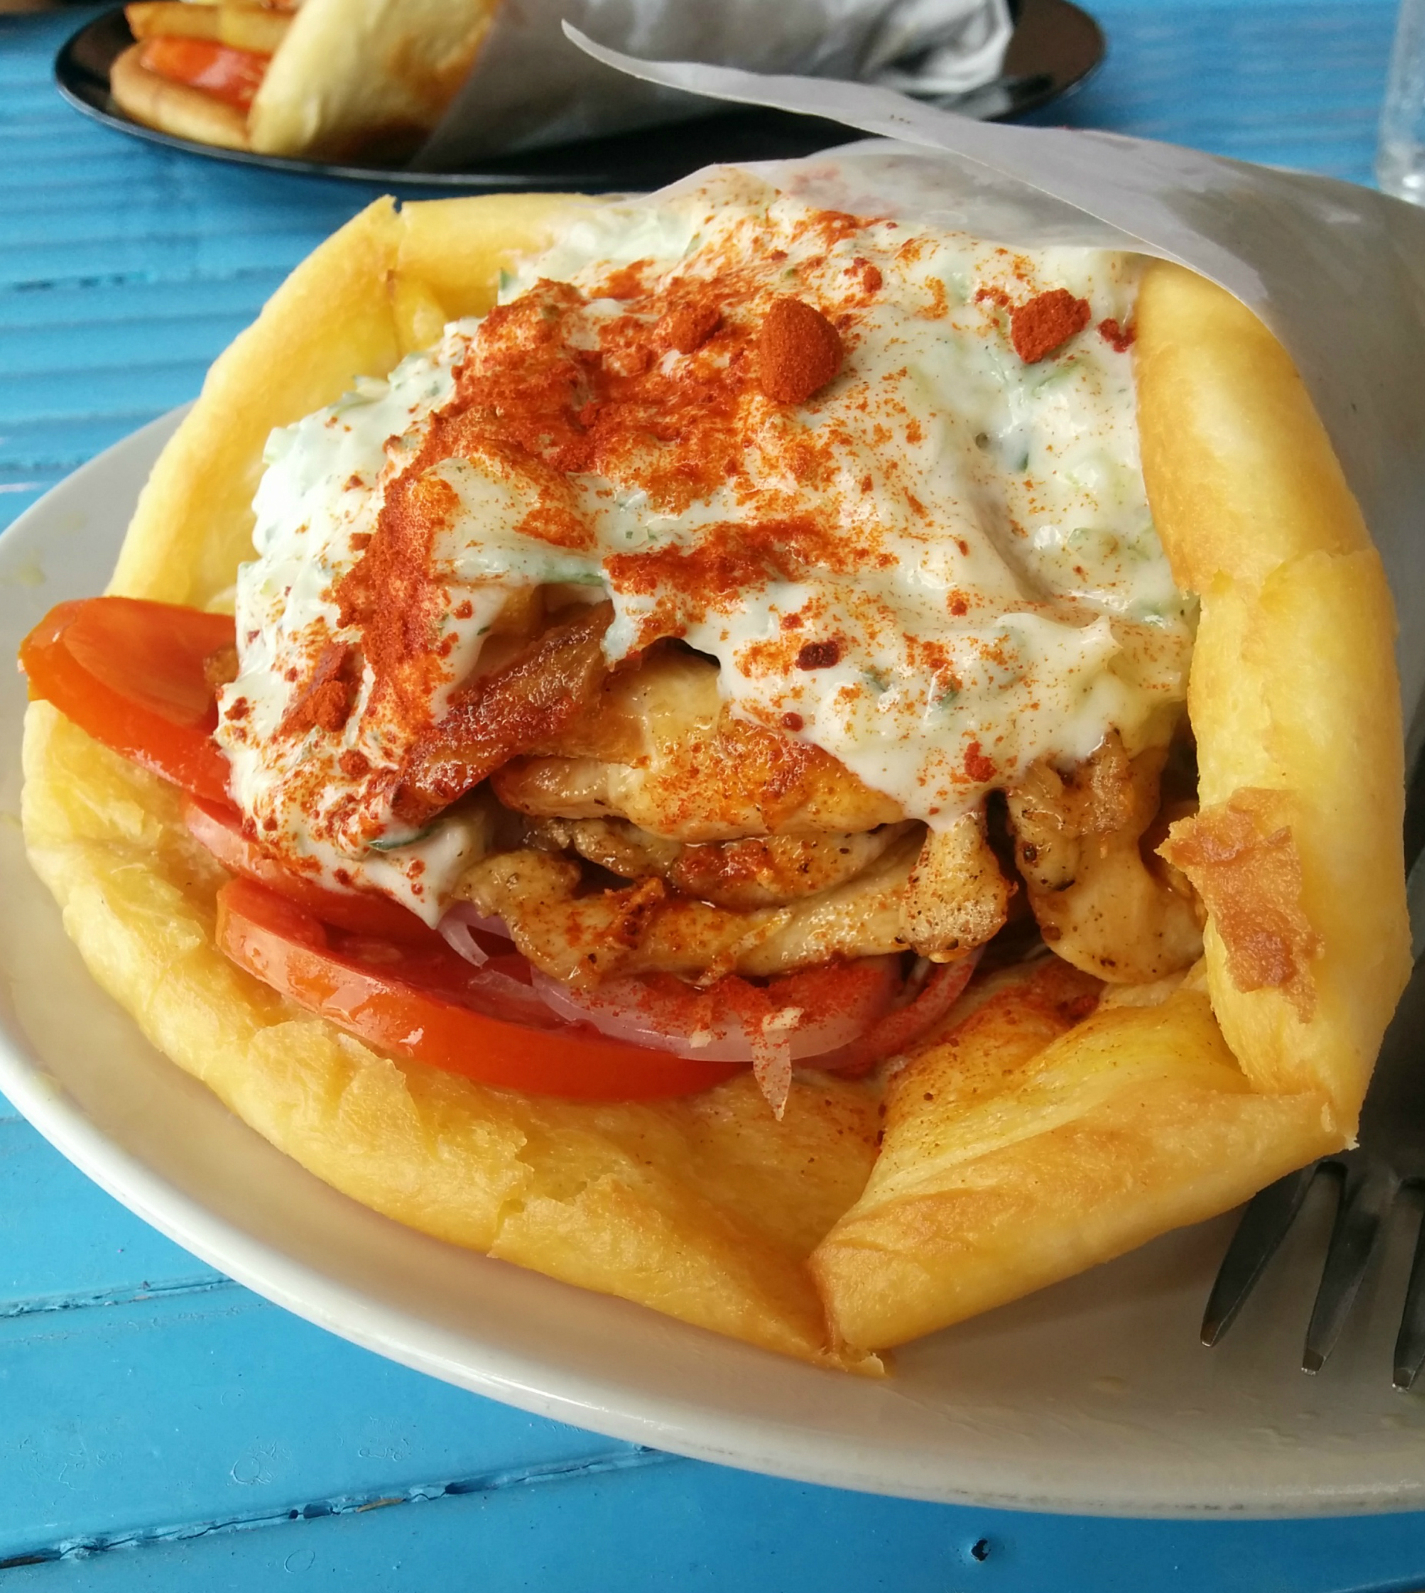 One of the biggest tastiest souvlakis I’ve had at the Greek Taverna